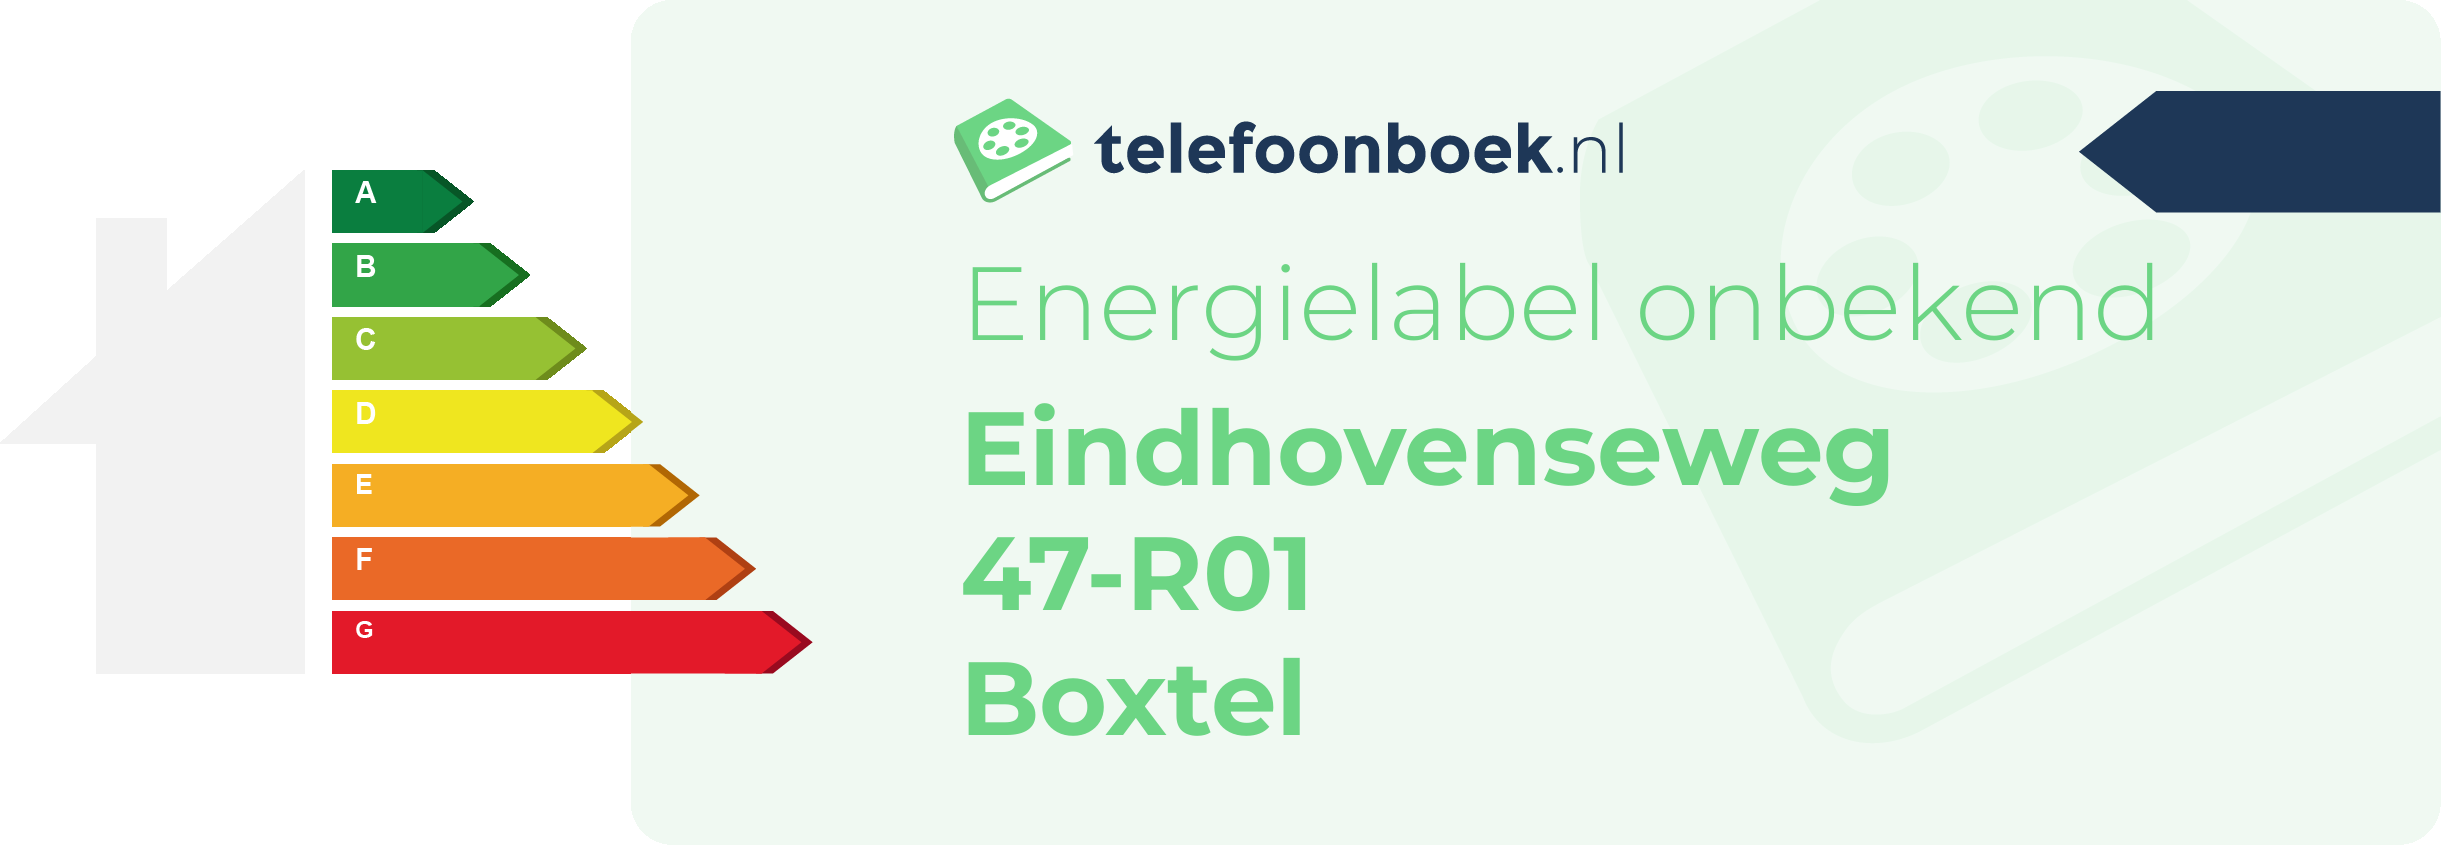 Energielabel Eindhovenseweg 47-R01 Boxtel